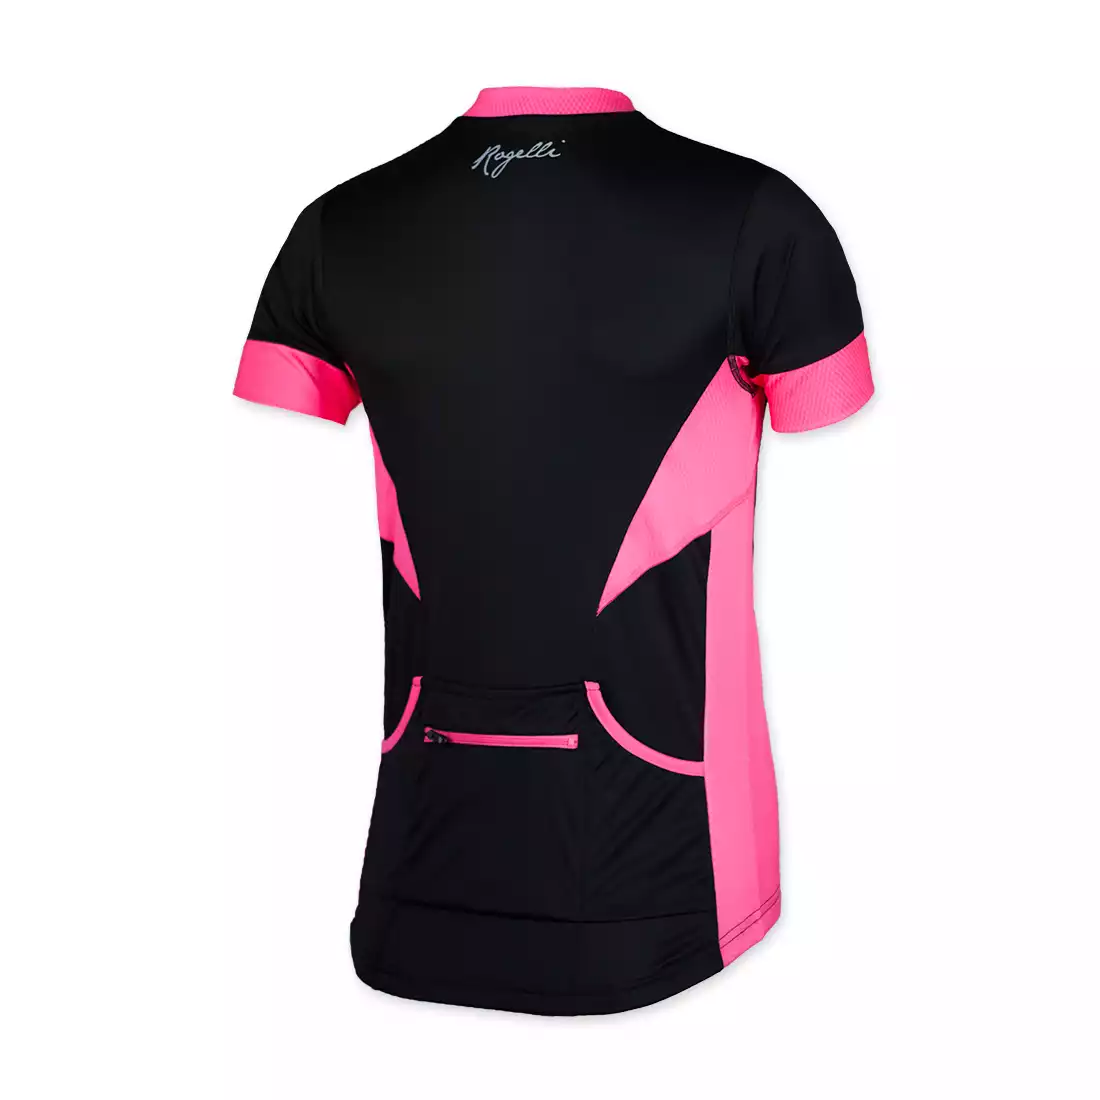 ROGELLI BIKE 010-025 CAPRICE - damska koszulka rowerowa, czarno-różowa